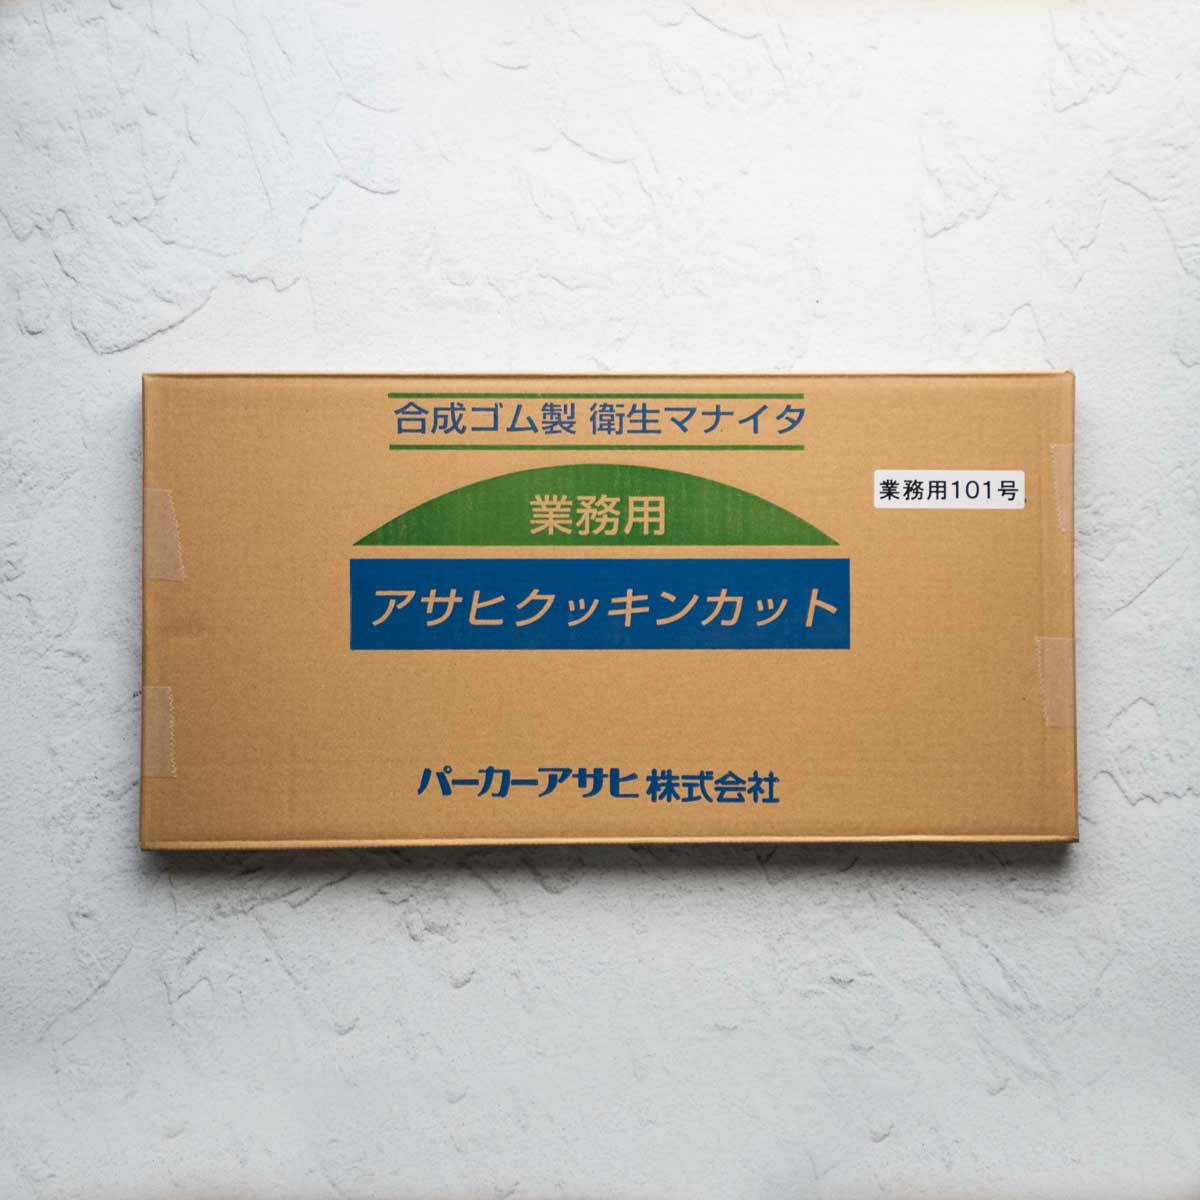 Asahi Professional Synthetic Rubber Cutting Board - 500x250x15